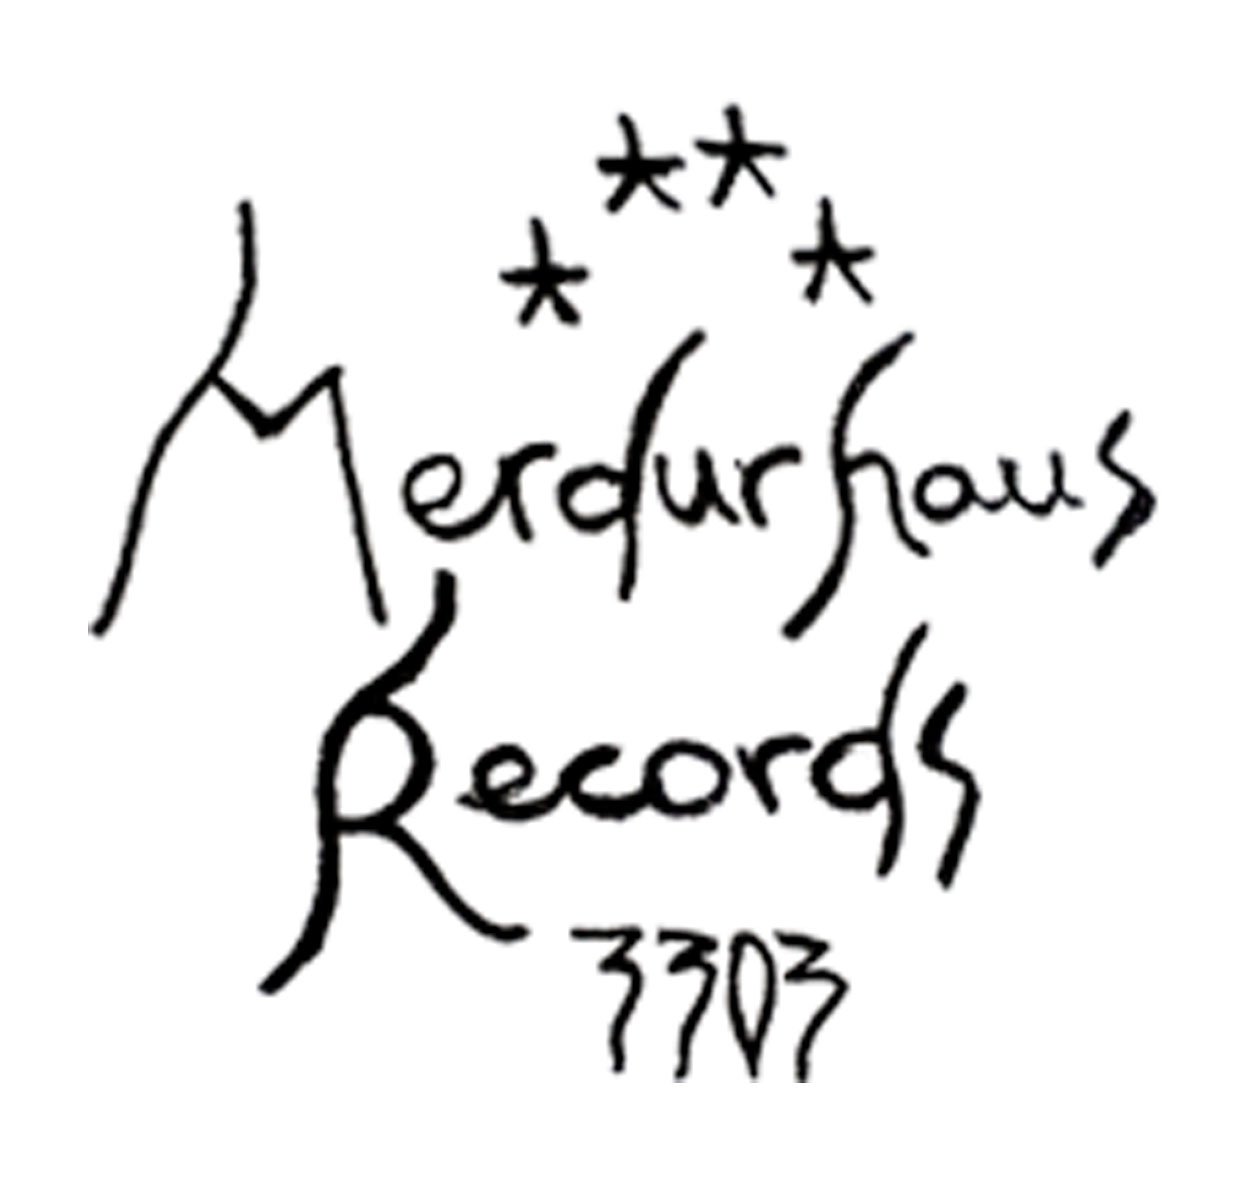 merdurhaus records